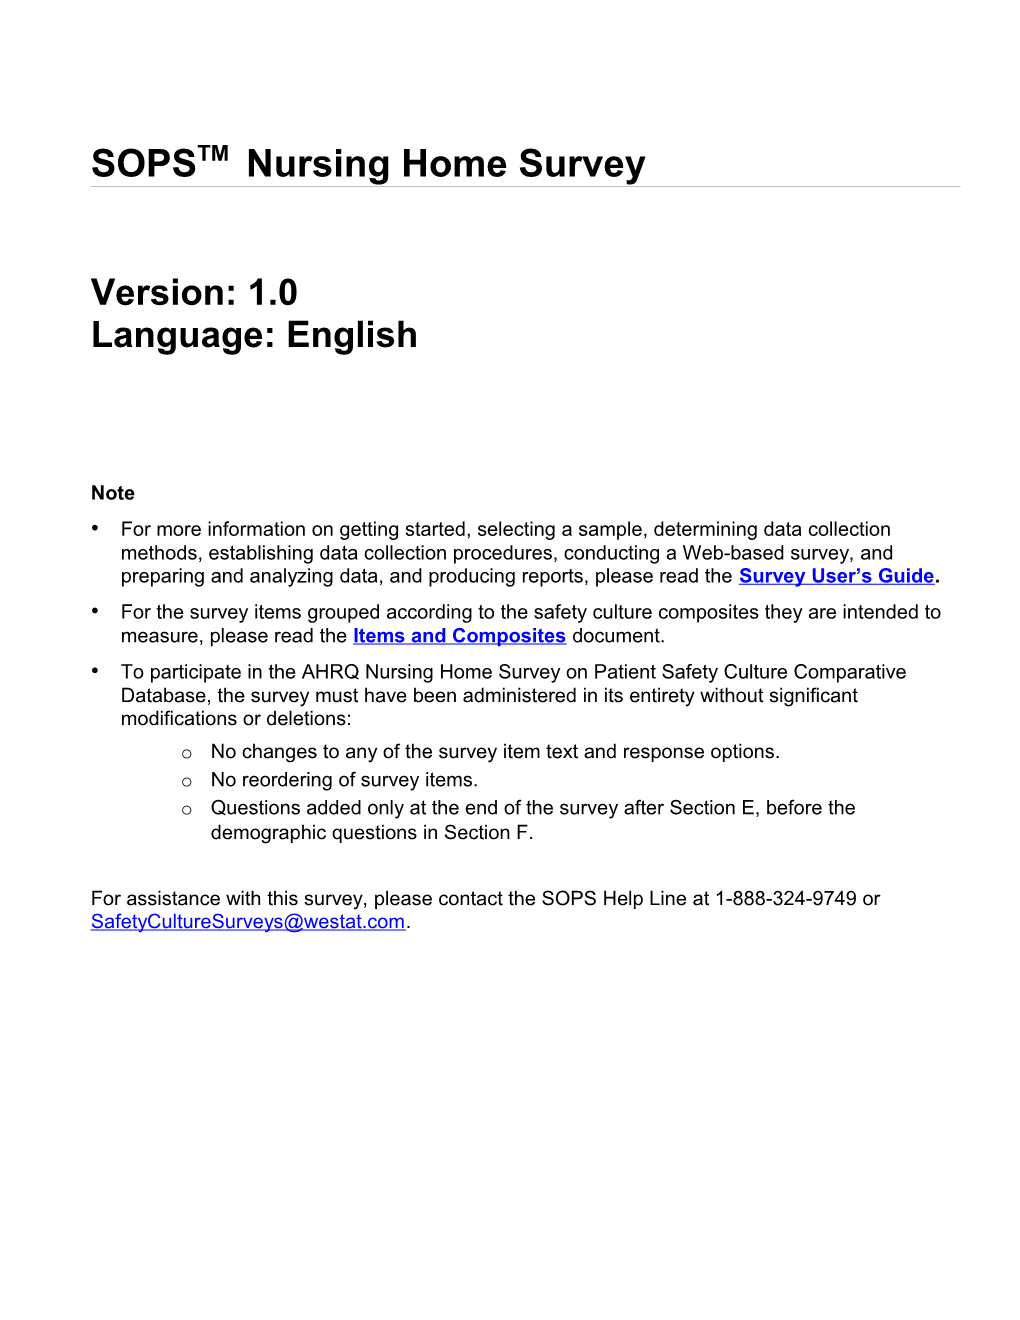 Nursing Home Survey on Patient Safety